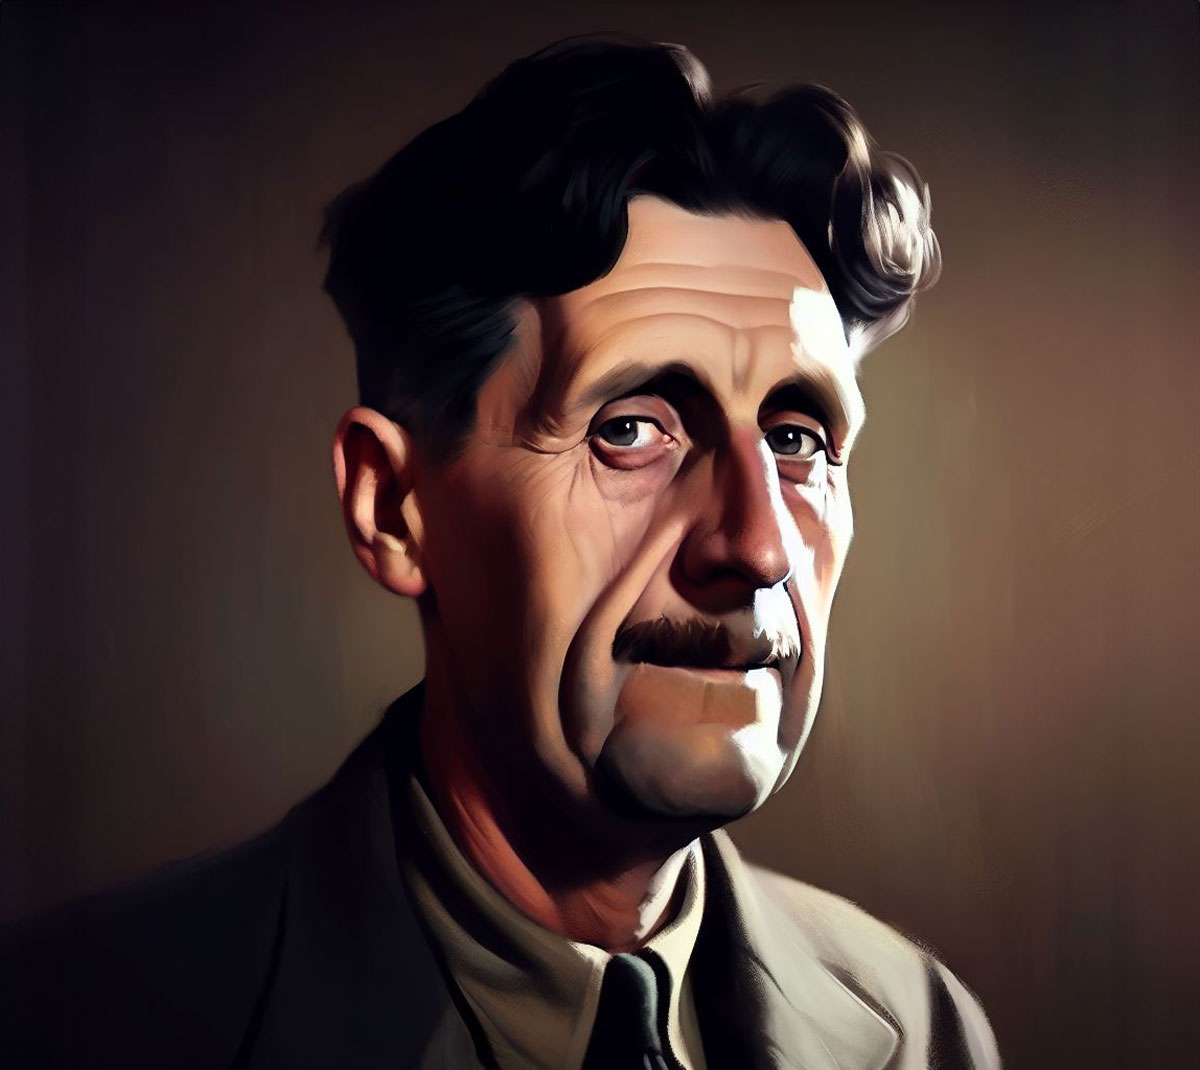 George-Orwell - Illustration by Poccioro